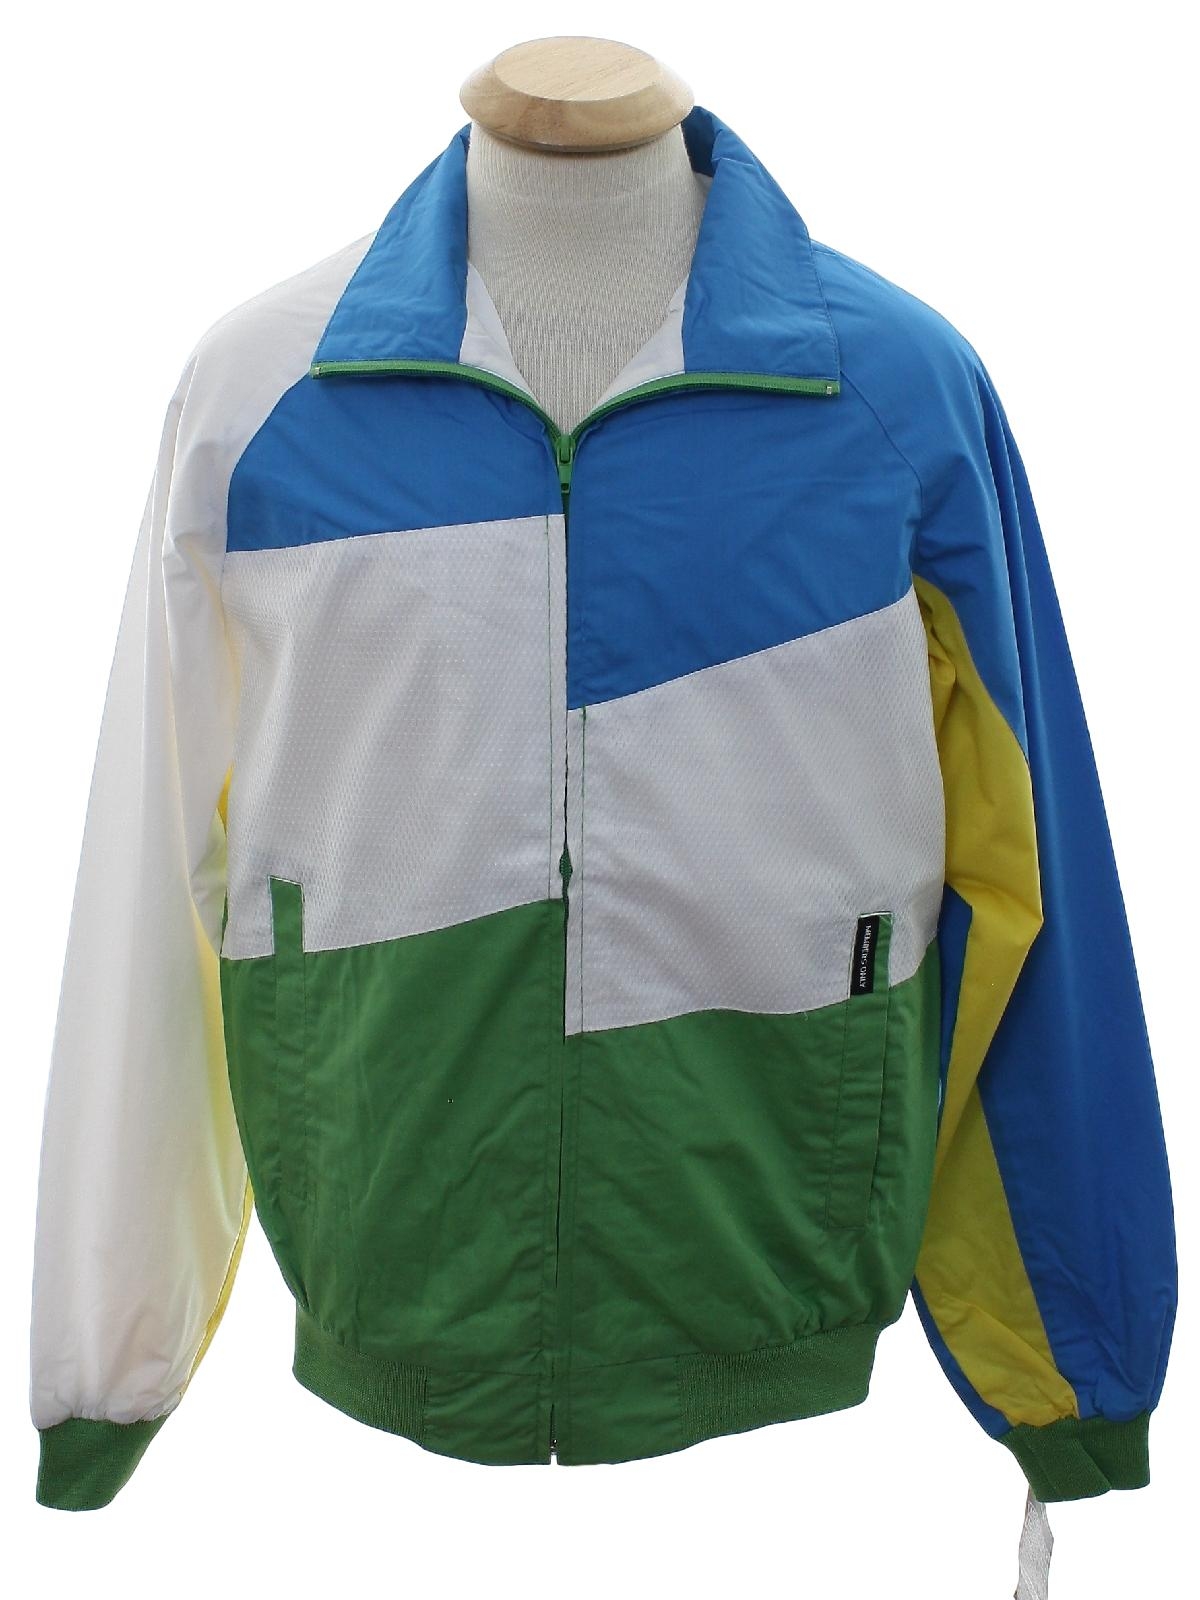 Members Only Eighties Vintage Jacket: 80s style (made in 2001